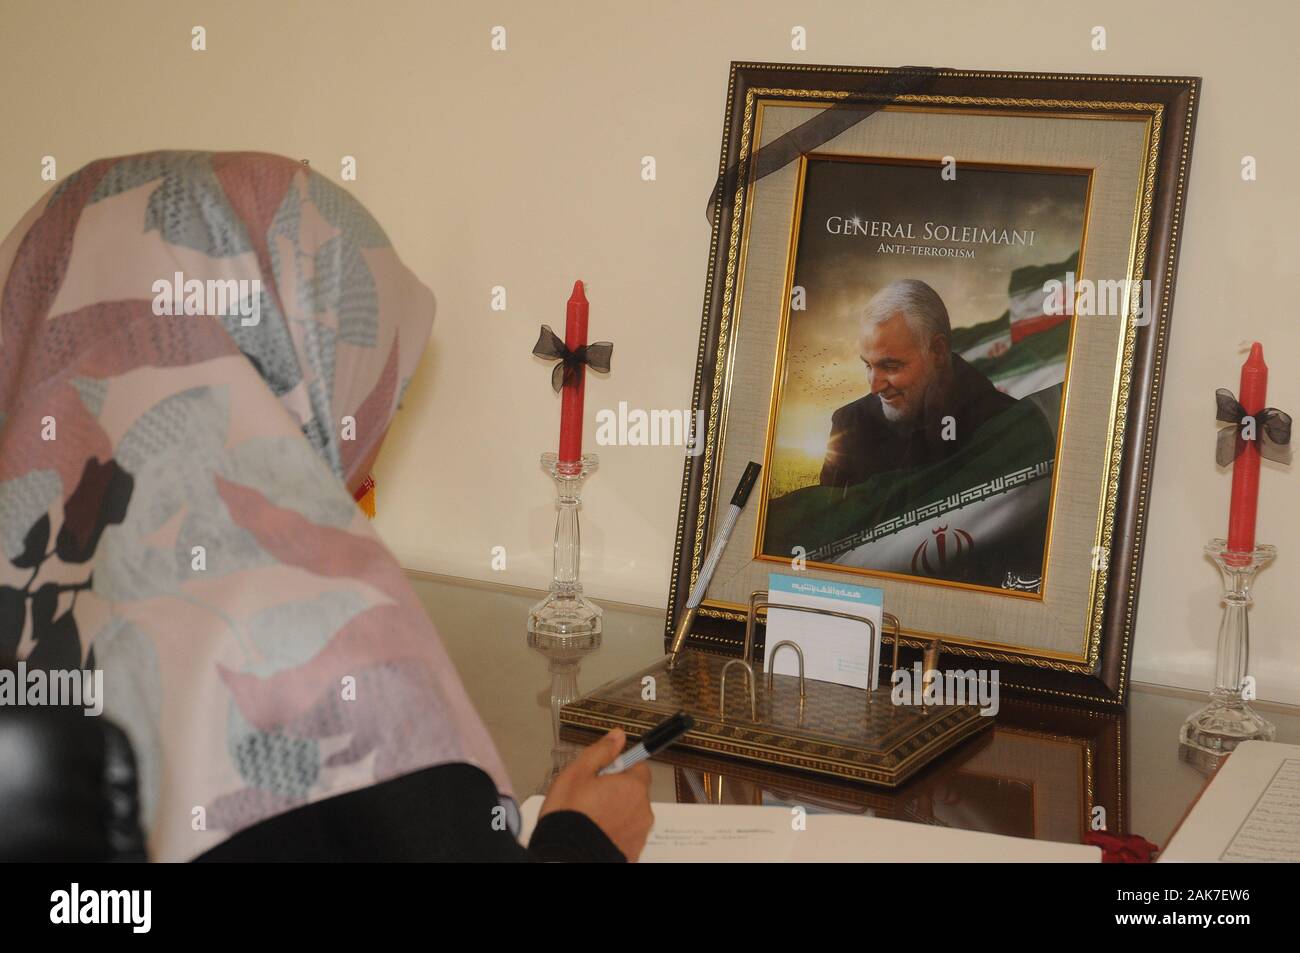 Jakarta, Indonésie. Jan 7, 2020. Les Indonésiens à l'ambassade d'Iran de général iranien Qassem Soleimani, chef de la force Qods iranienne, qui est mort à la suite d'attaques de drones à l'aéroport de Bagdad. Credit : Dasril Roszandi/ZUMA/Alamy Fil Live News Banque D'Images